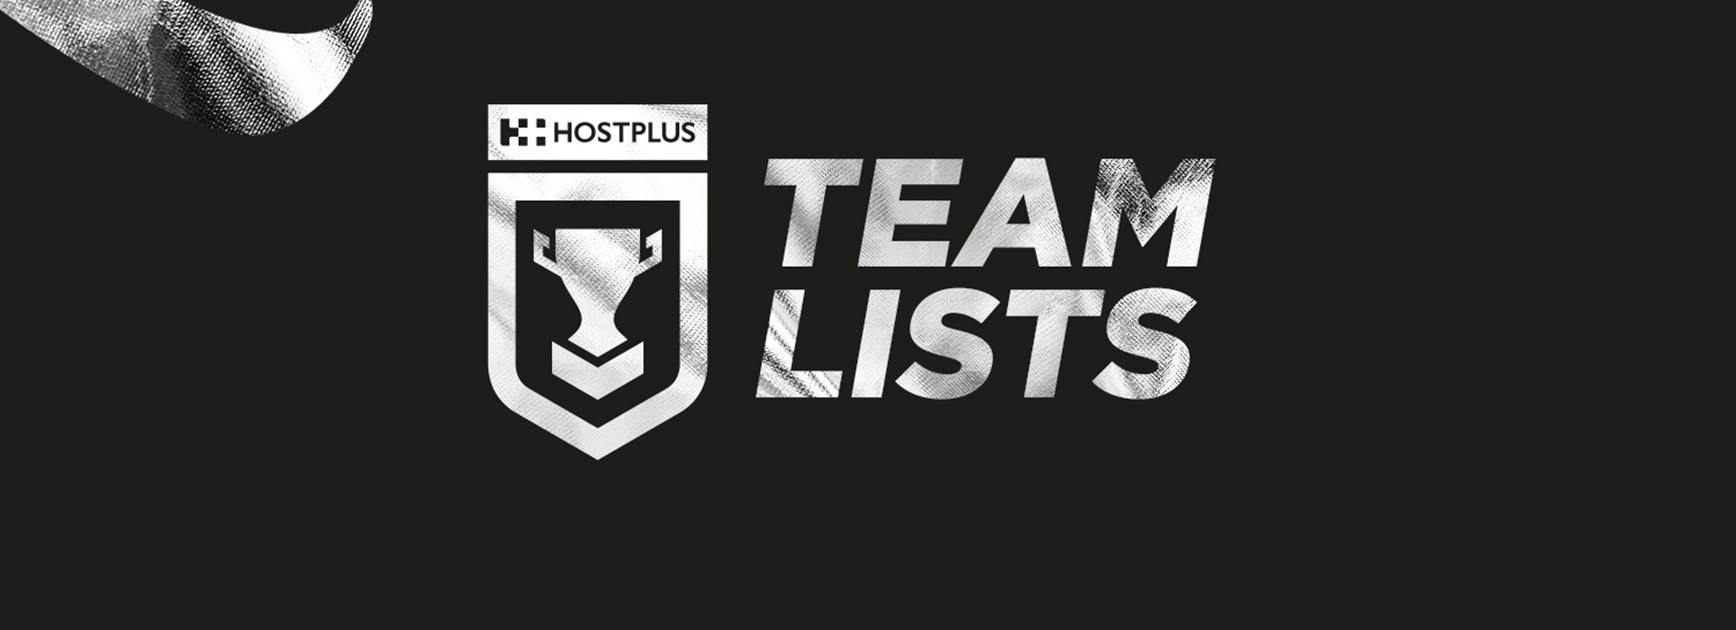 Round 2 Hostplus Cup team lists